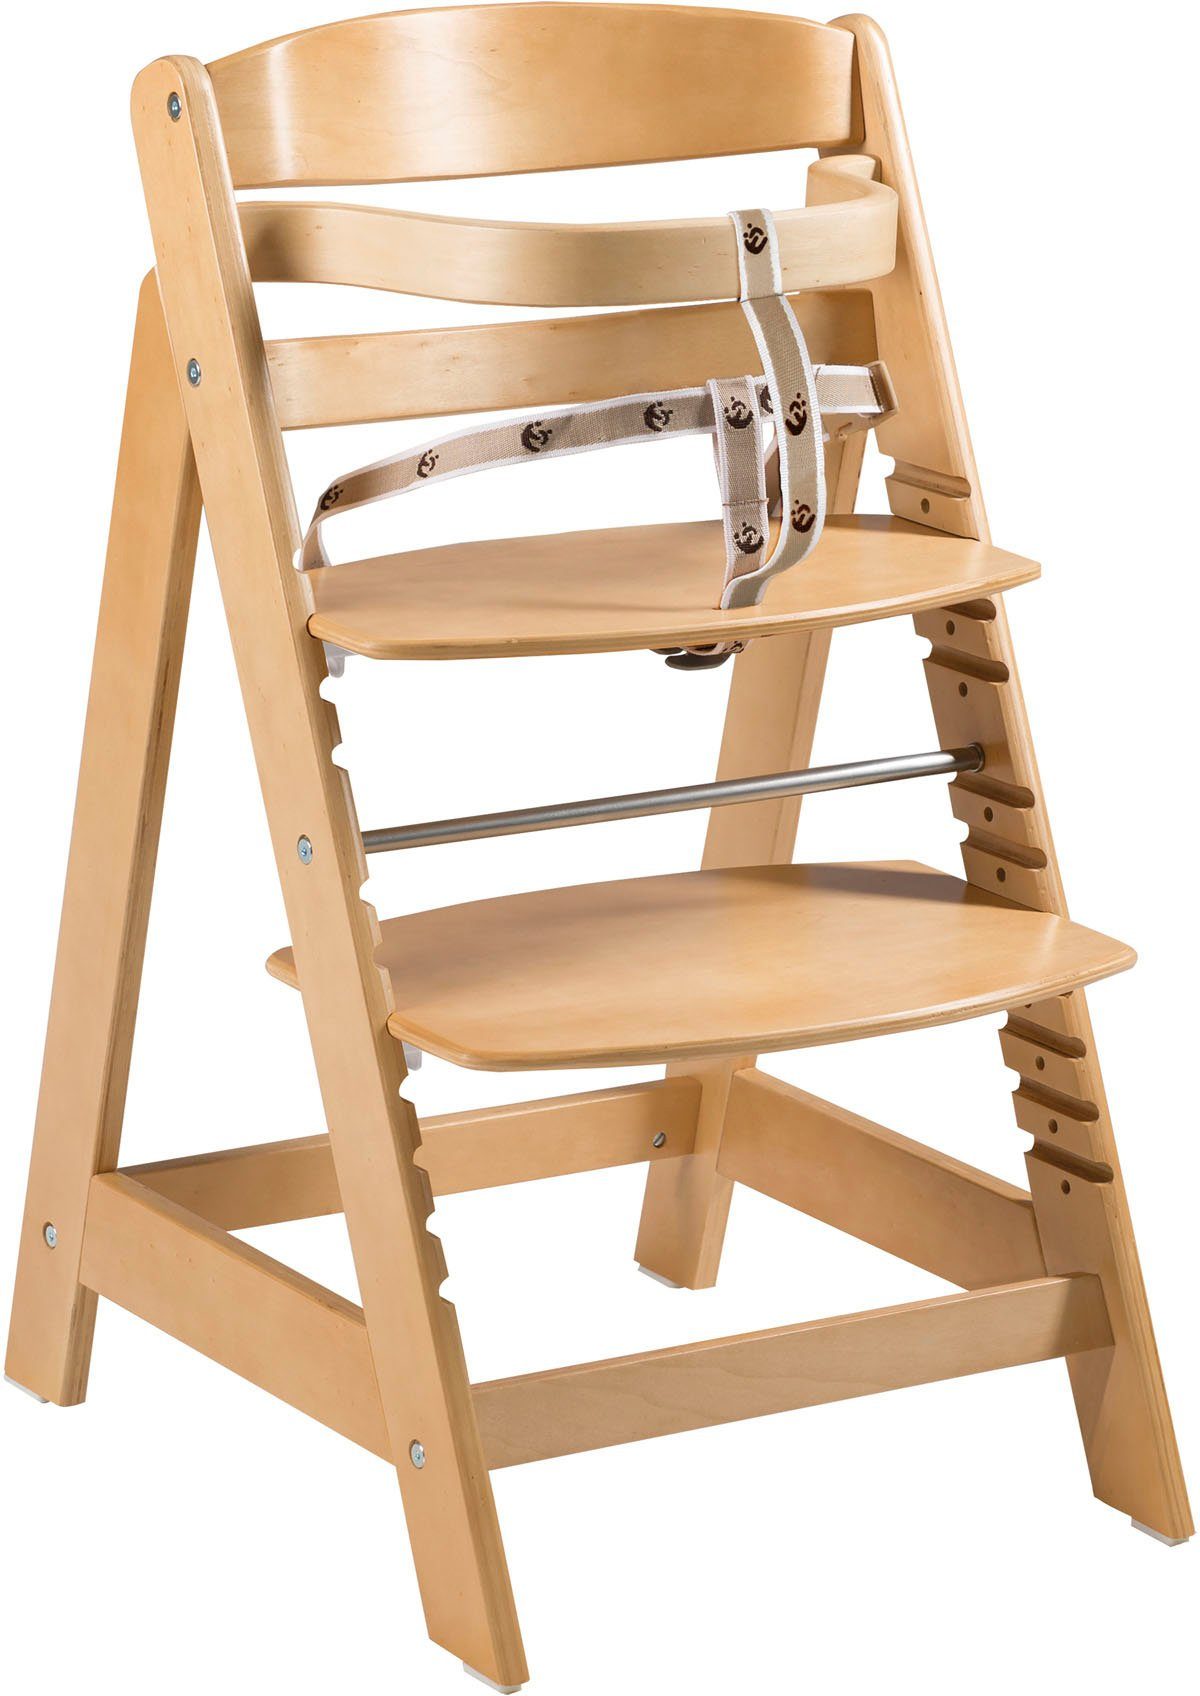 roba® Hochstuhl Treppenhochstuhl Sit Up Click, natur, aus Holz